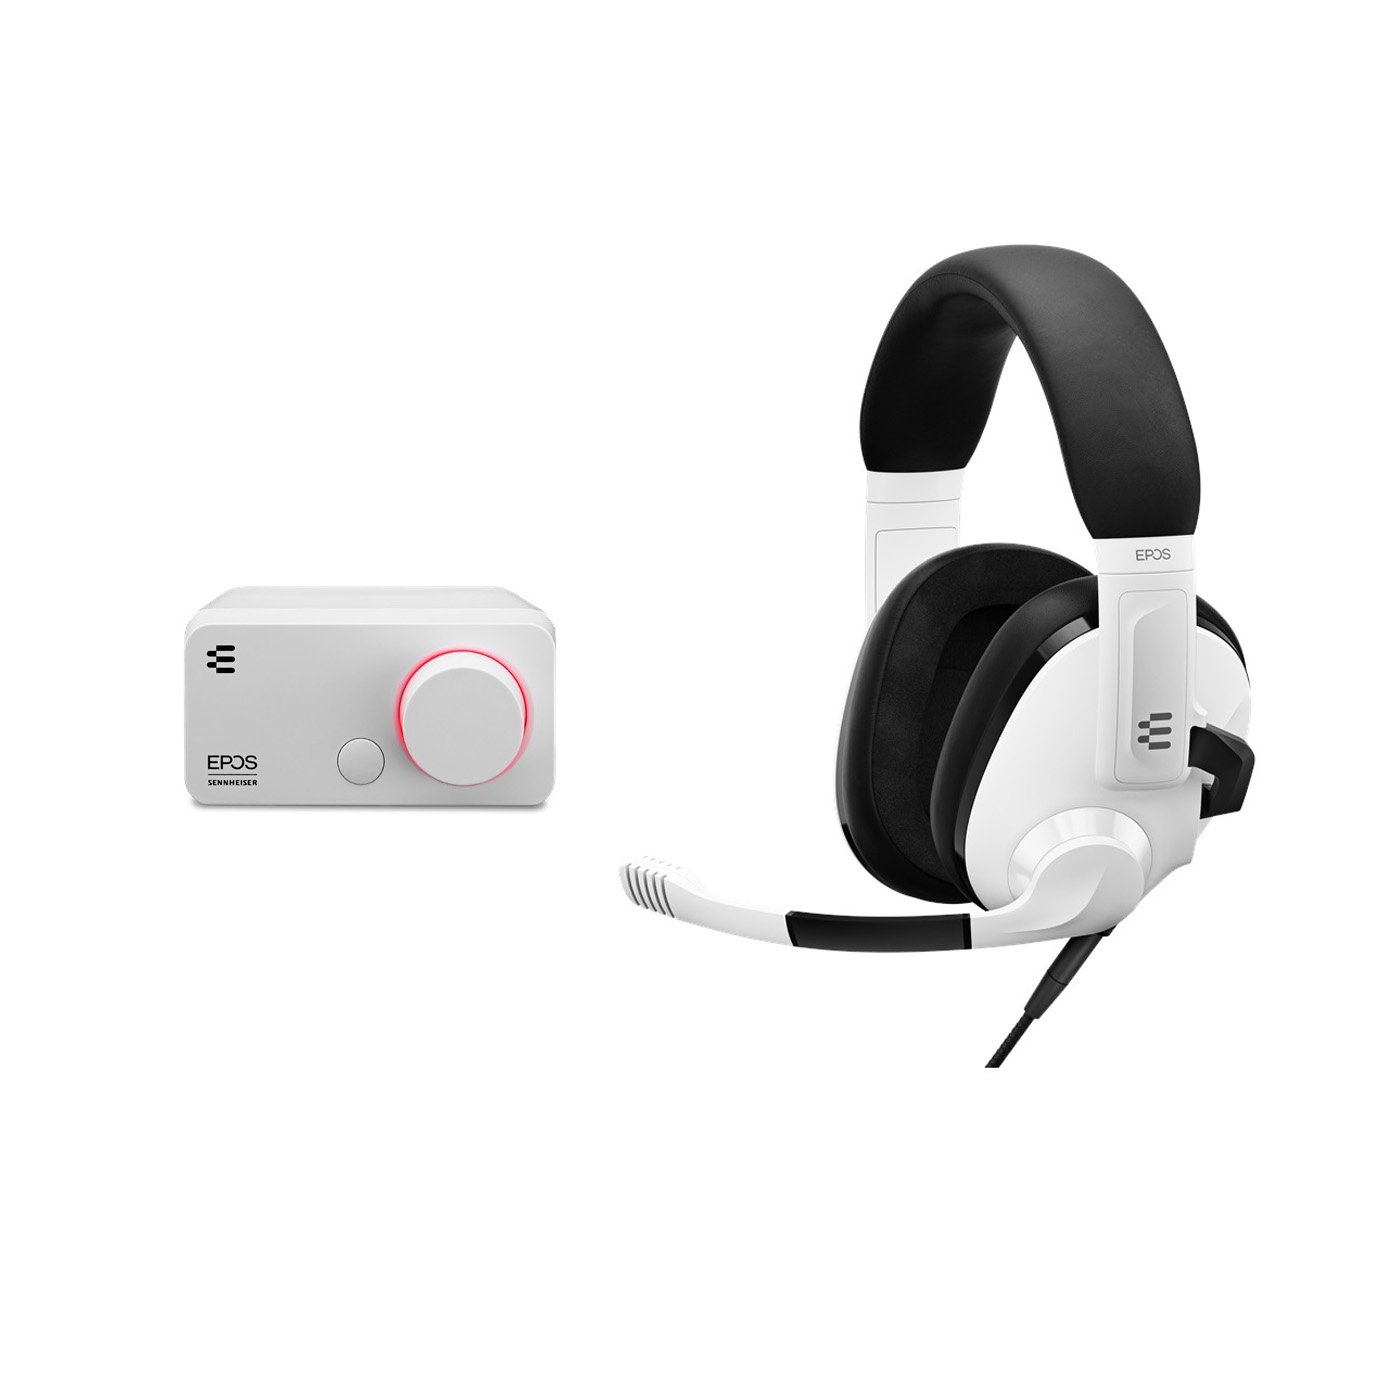 Epos - H3 Gaming Headset White + GSX 300 External Sound Card - Bundle